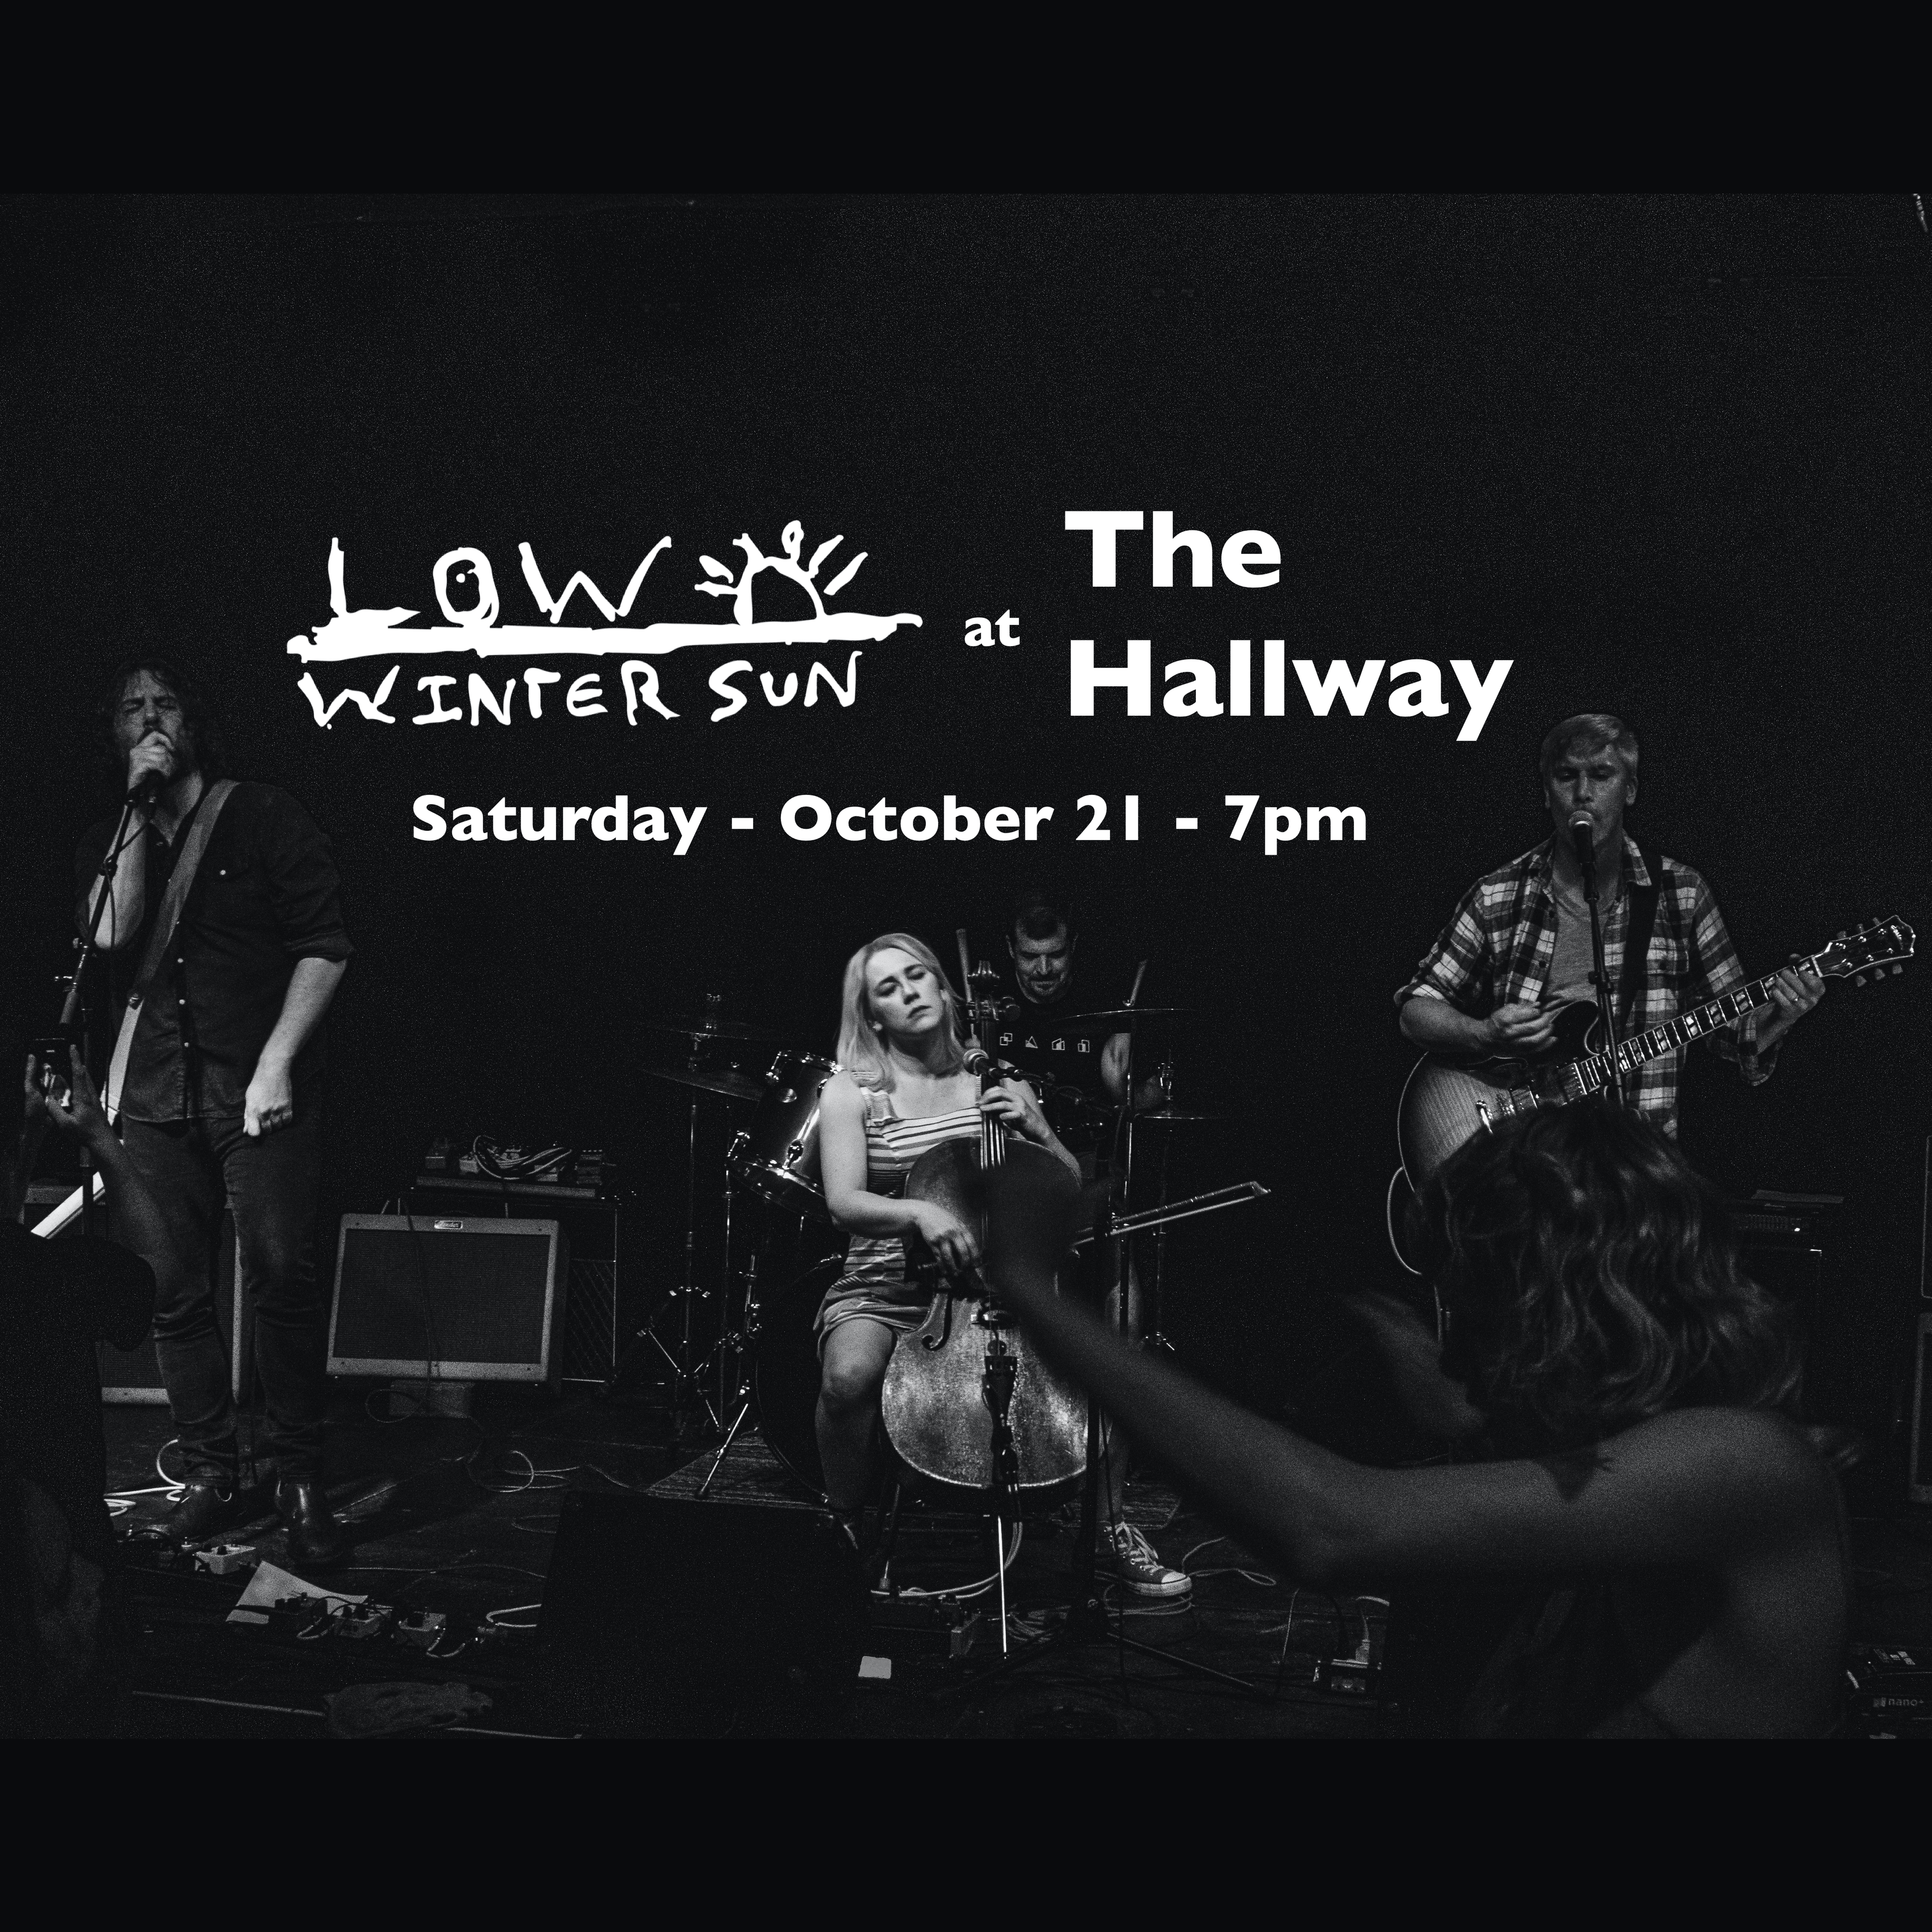 The Hallway show